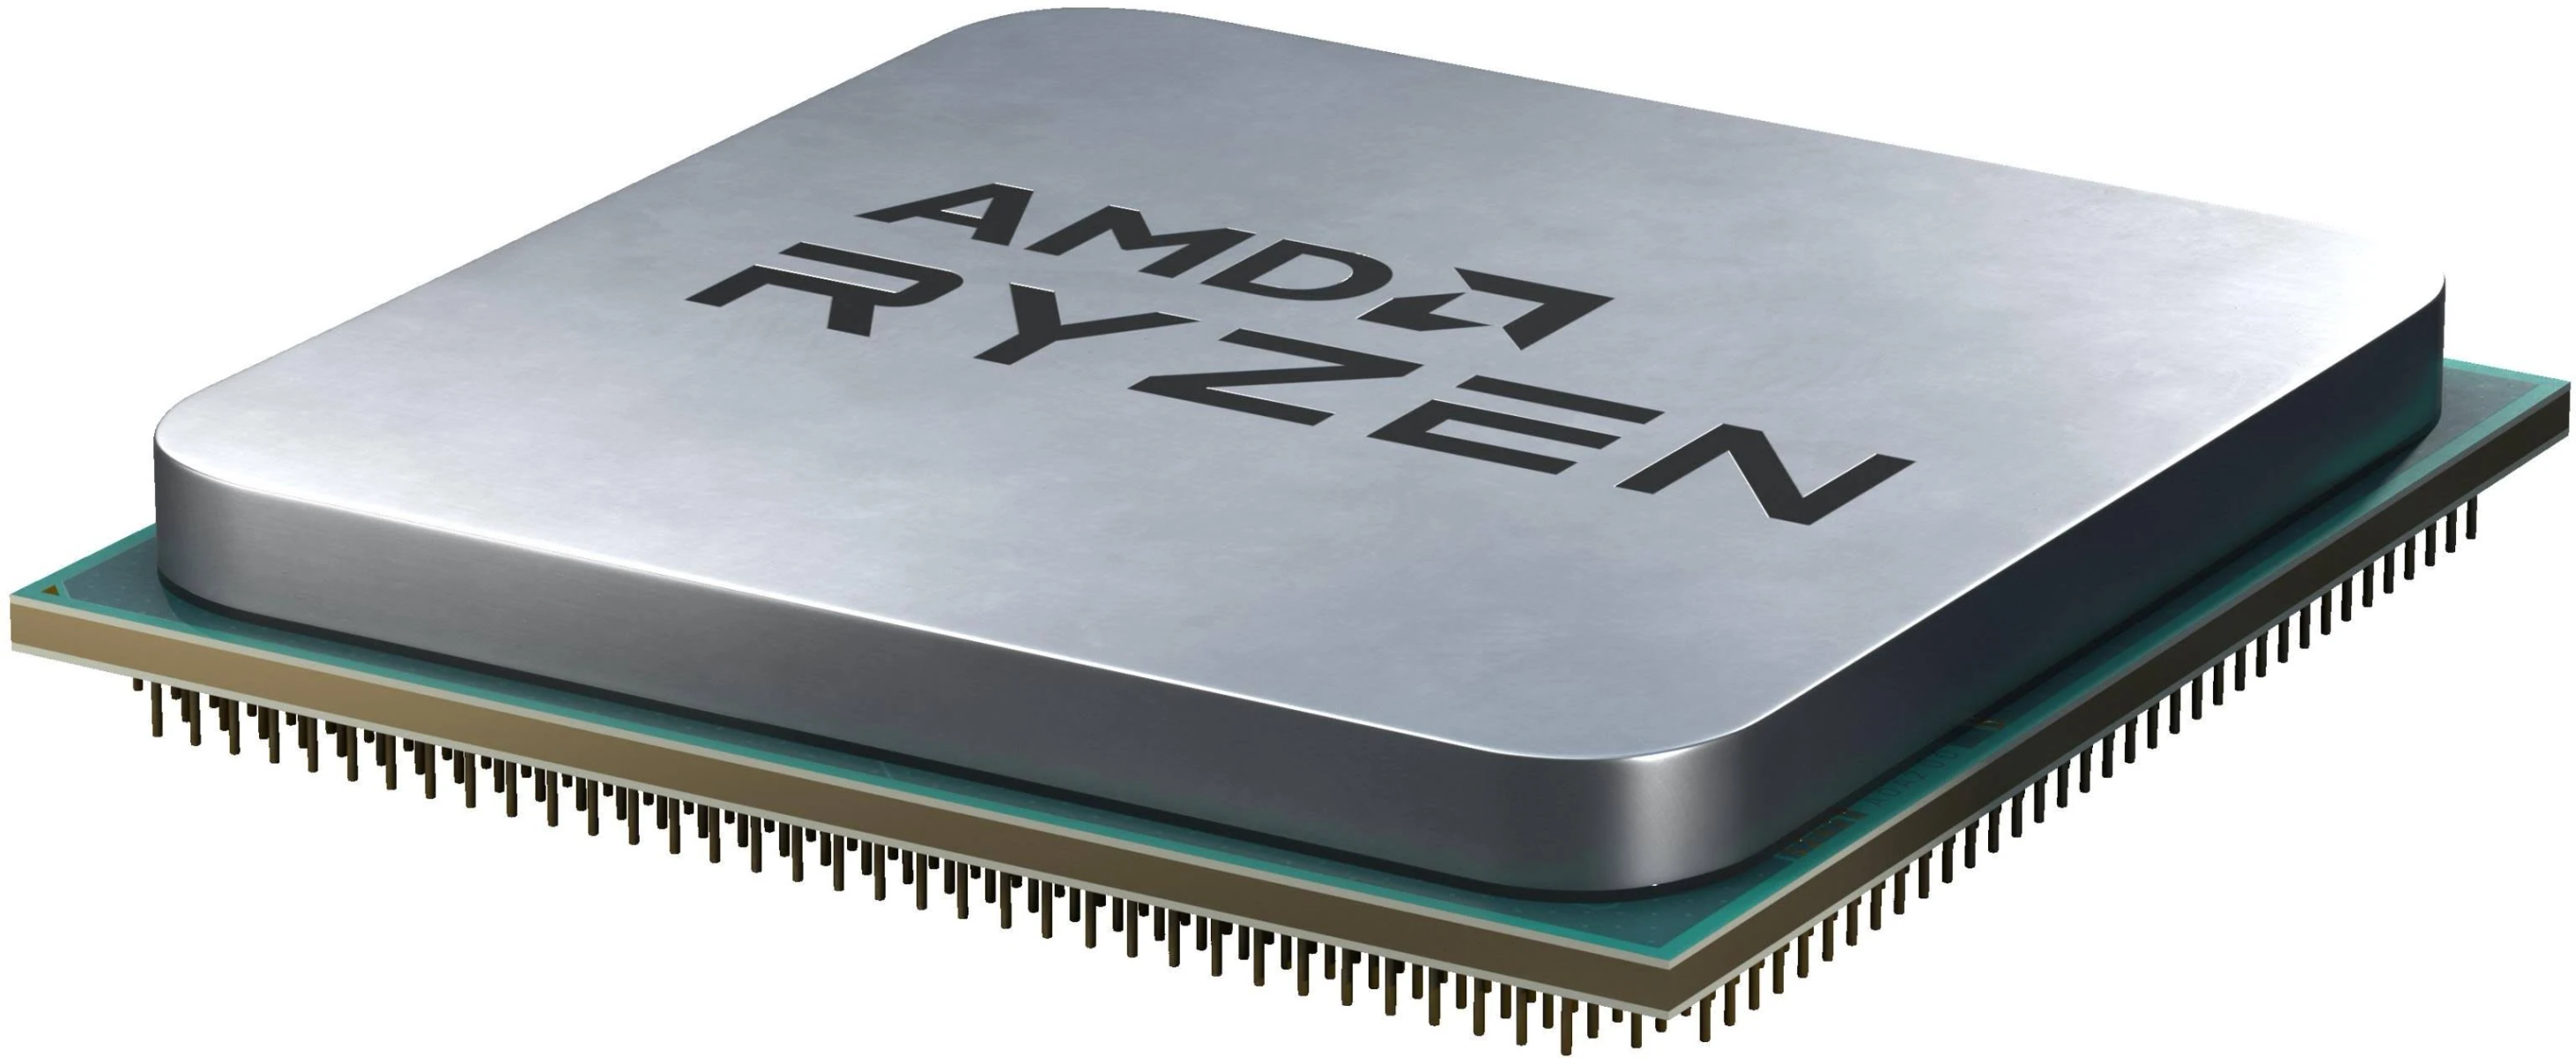 AMD 4500 mit Mehrfarbig Prozessor Boxed-Kühler